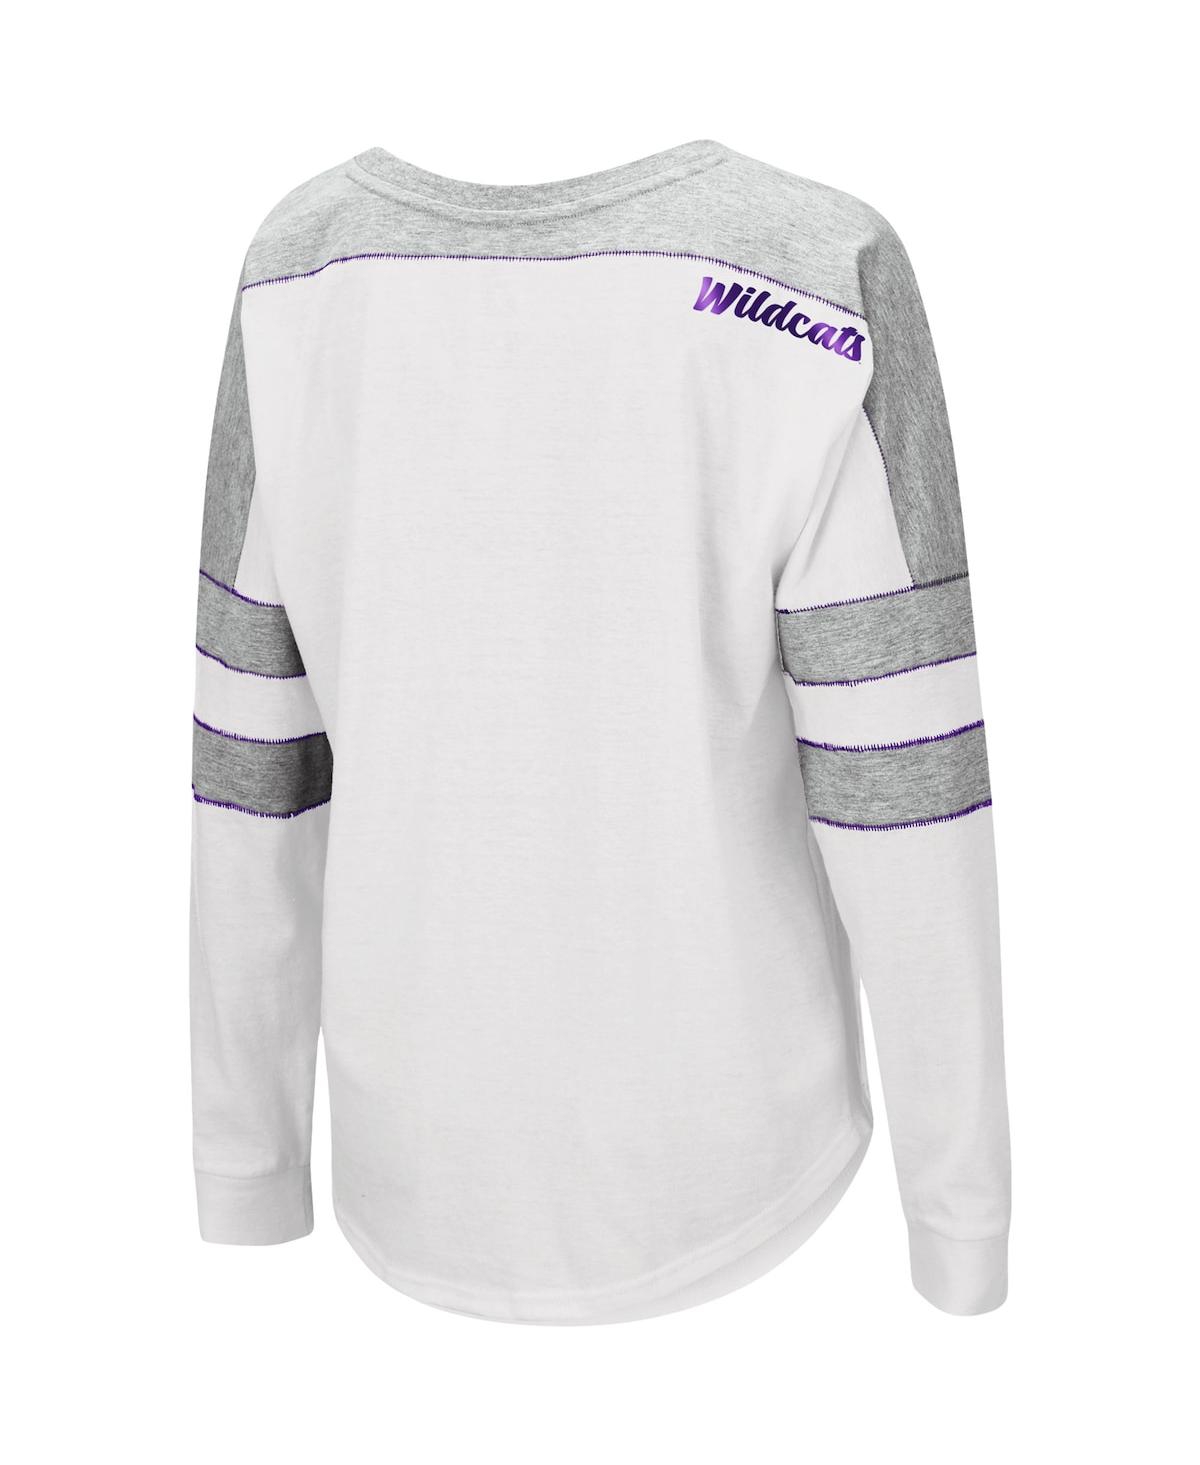 Shop Colosseum Women's  White Kansas State Wildcats Trey Dolman Long Sleeve T-shirt